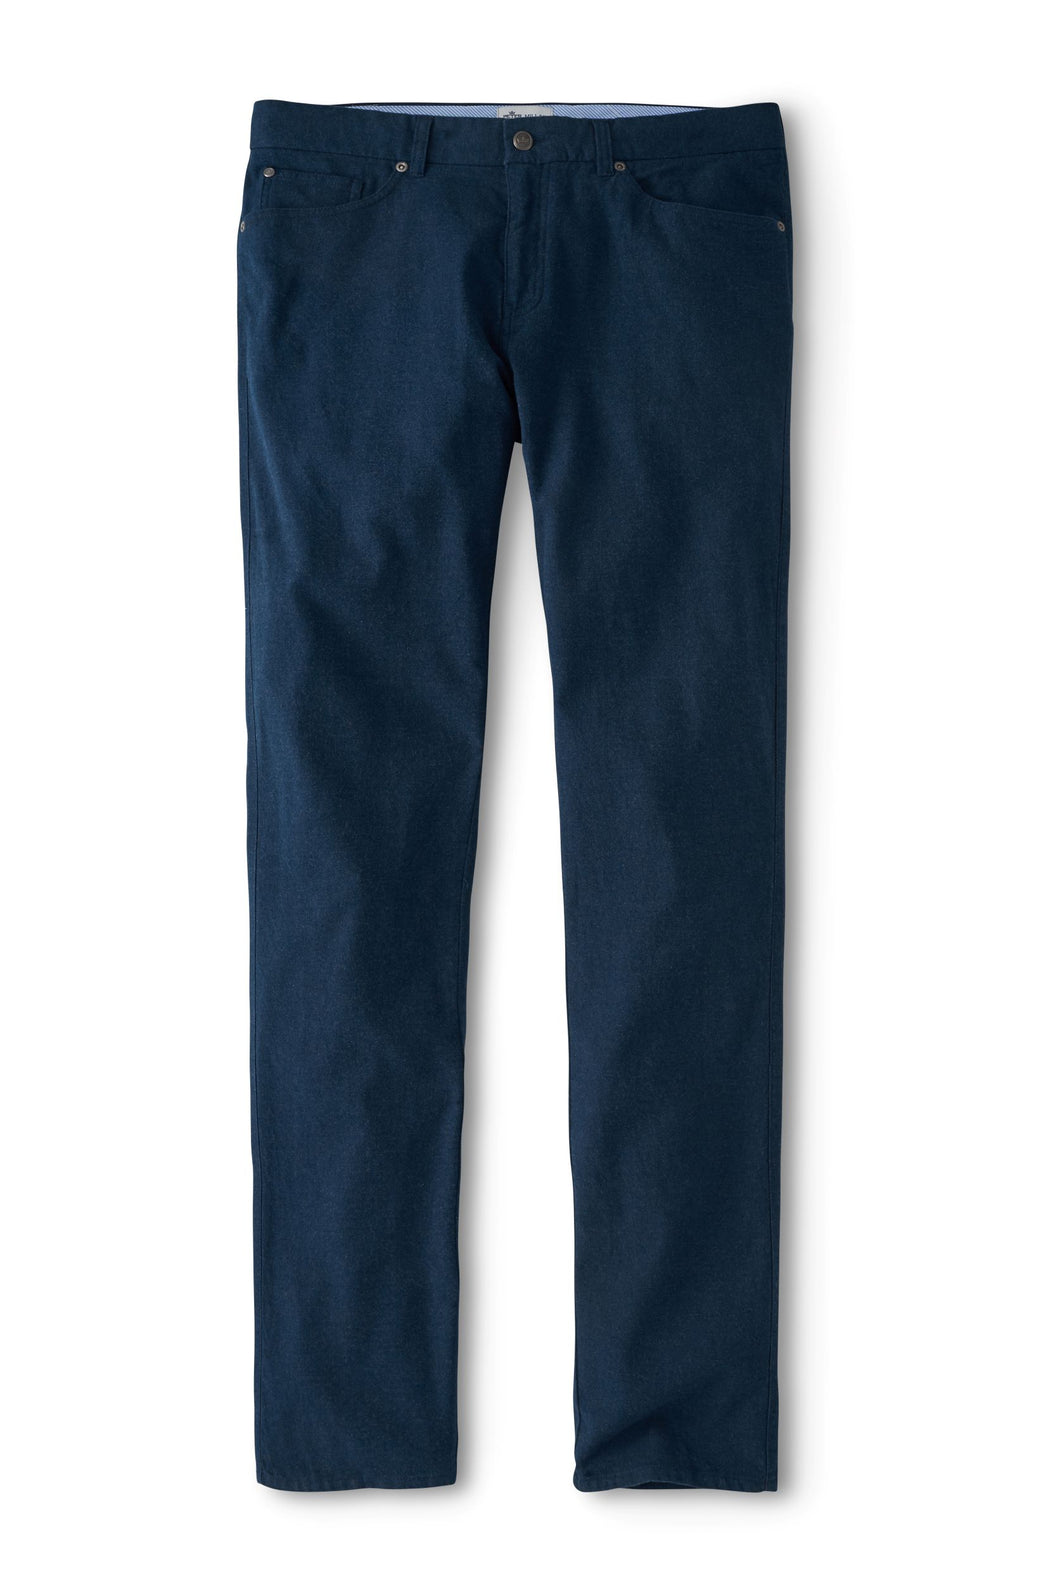 Peter Millar Cotton Flannel Five-Pocket Pant in Atlantic Blue